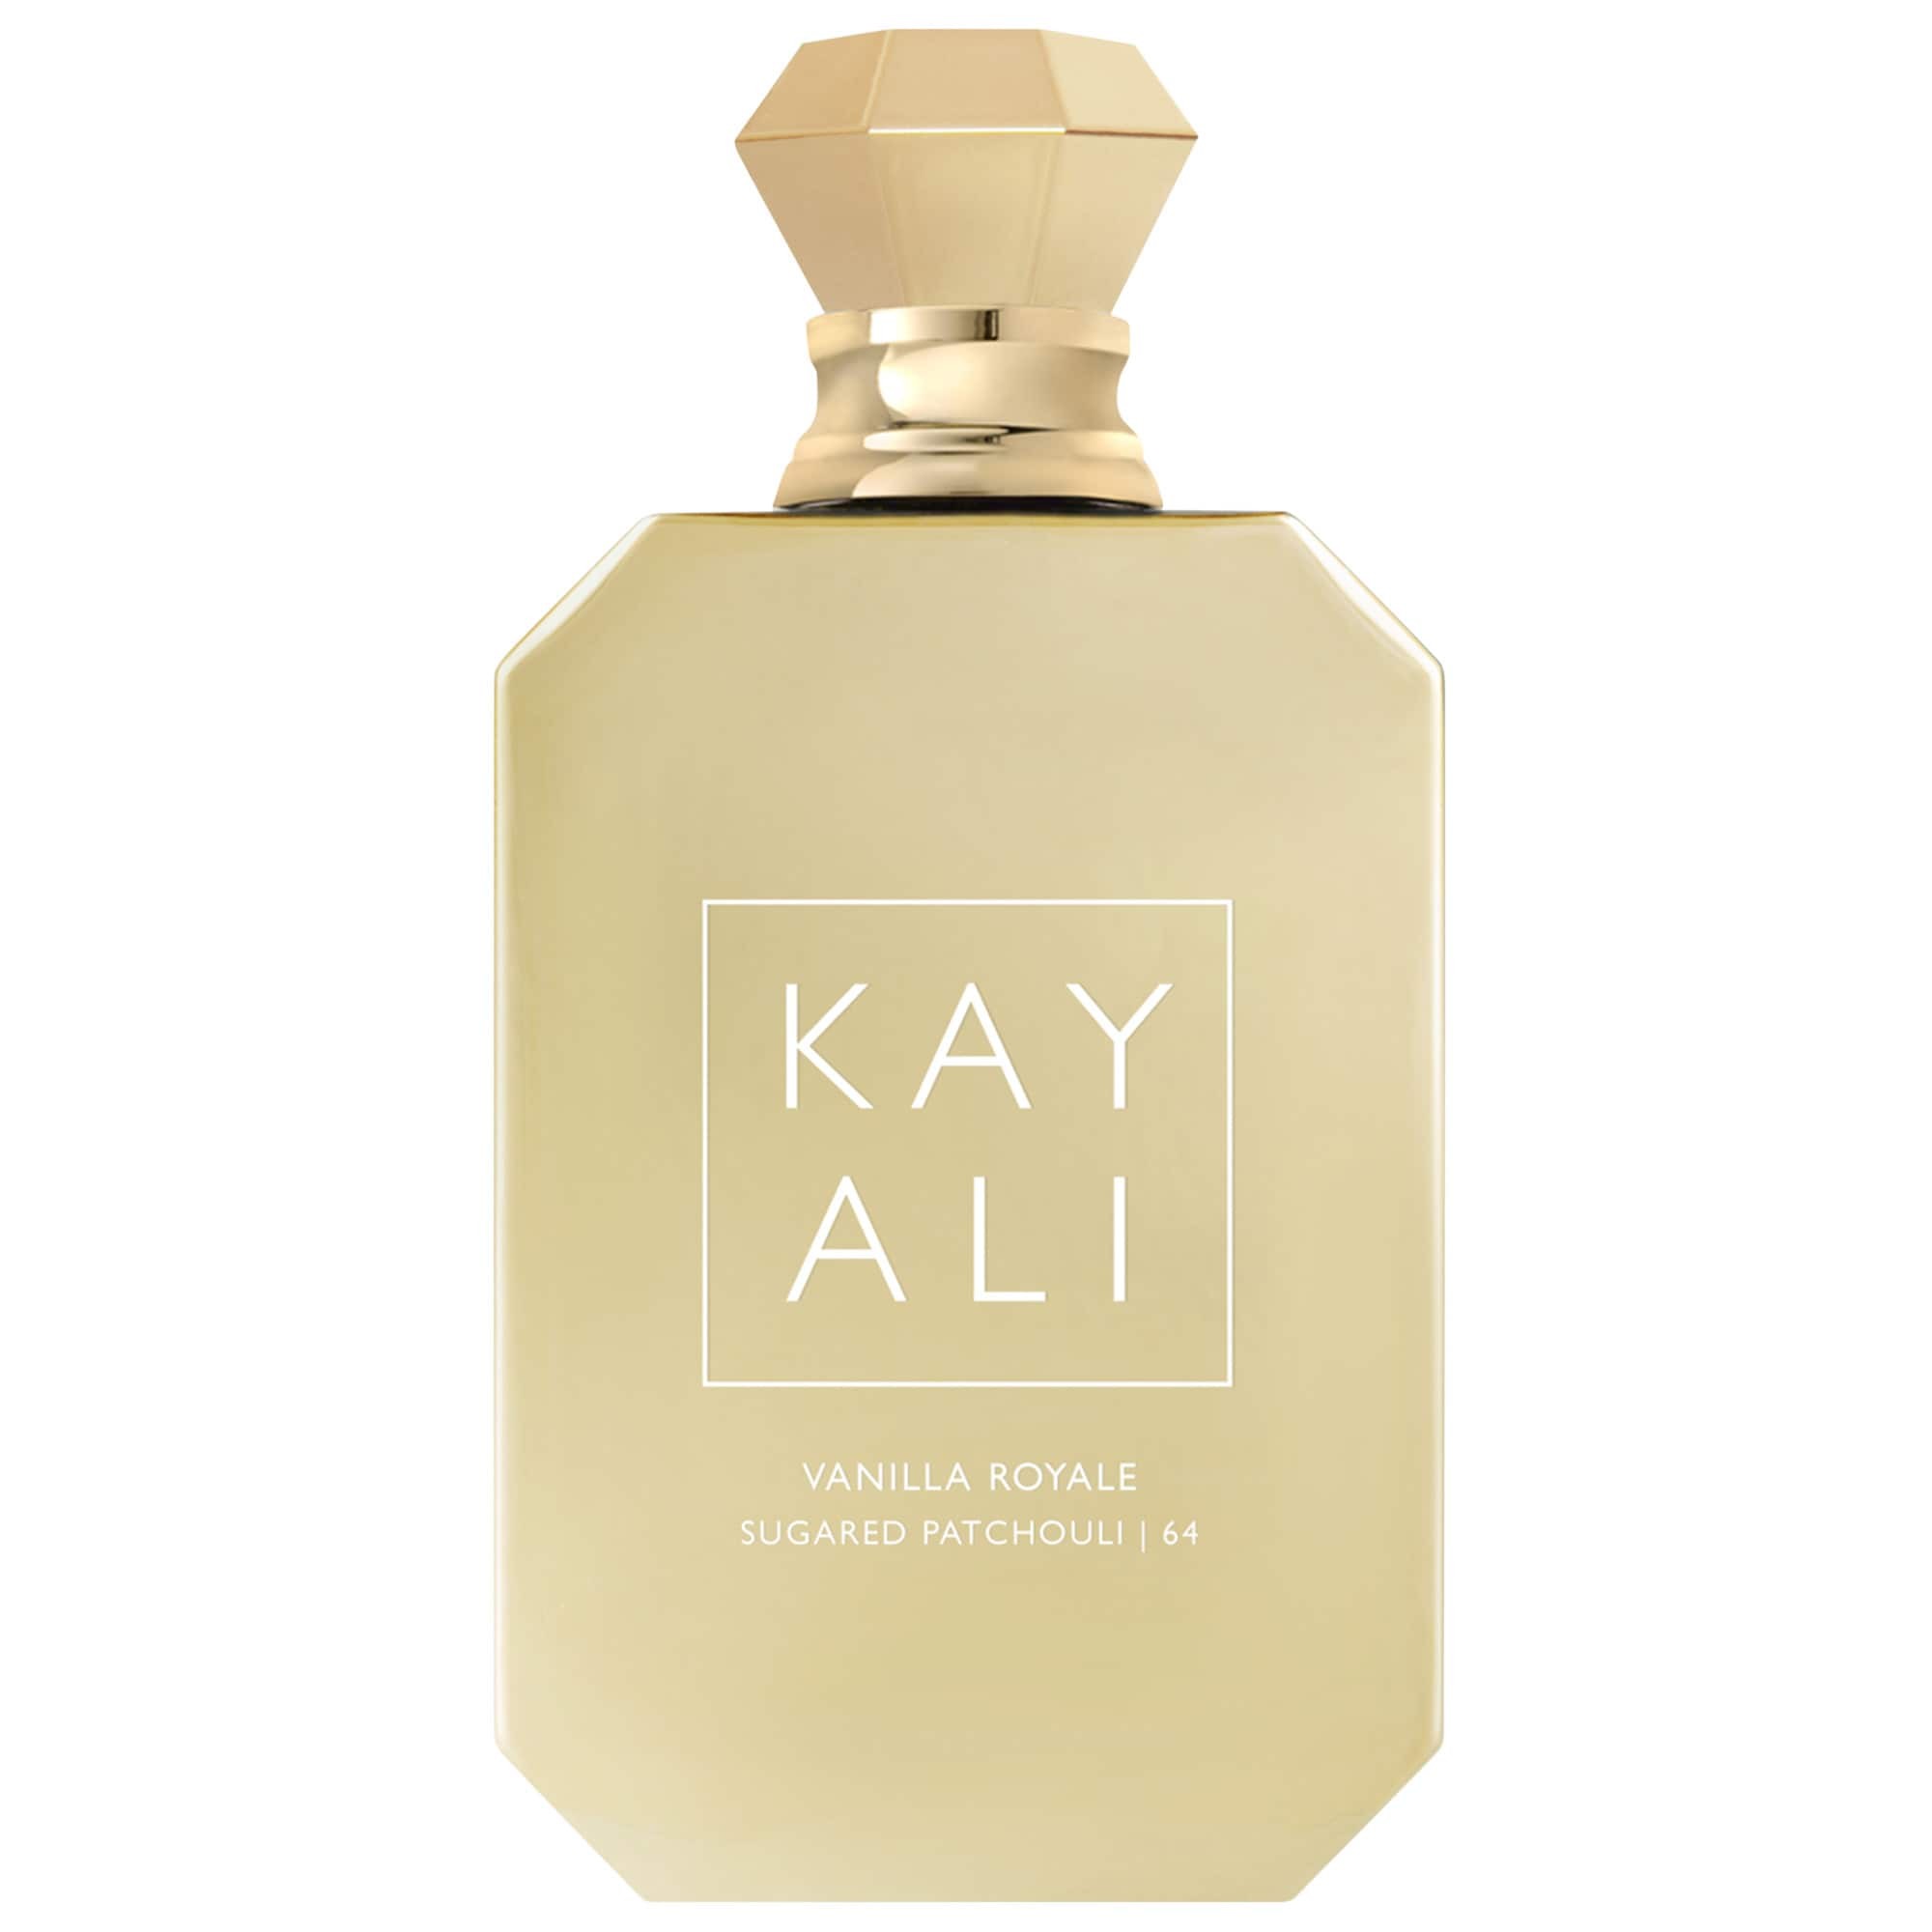 Kayali Vanilla Royale Sugared Patchouli | 64 Eau de Parfum Intense 50 mL